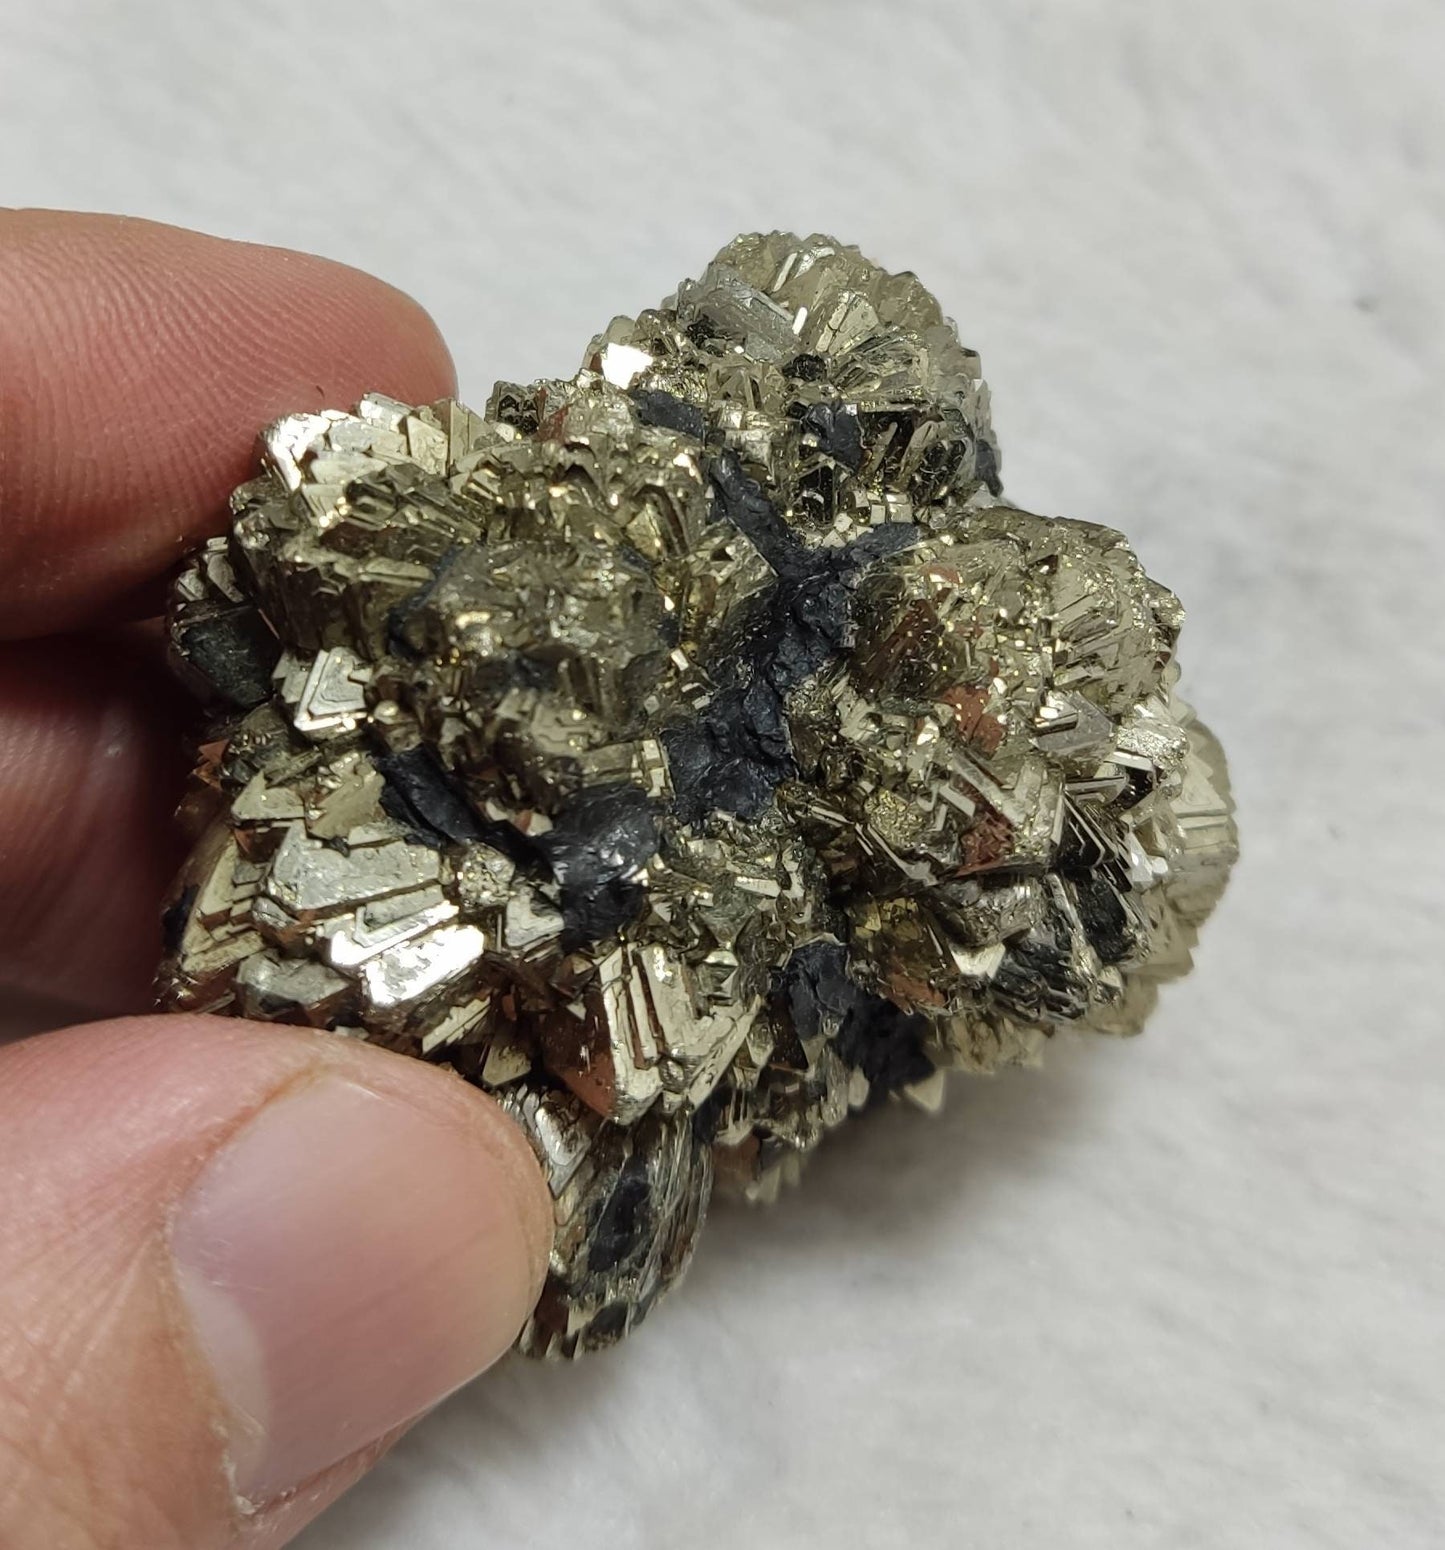 An amazing specimen of pyrite/marcasite 158 grams